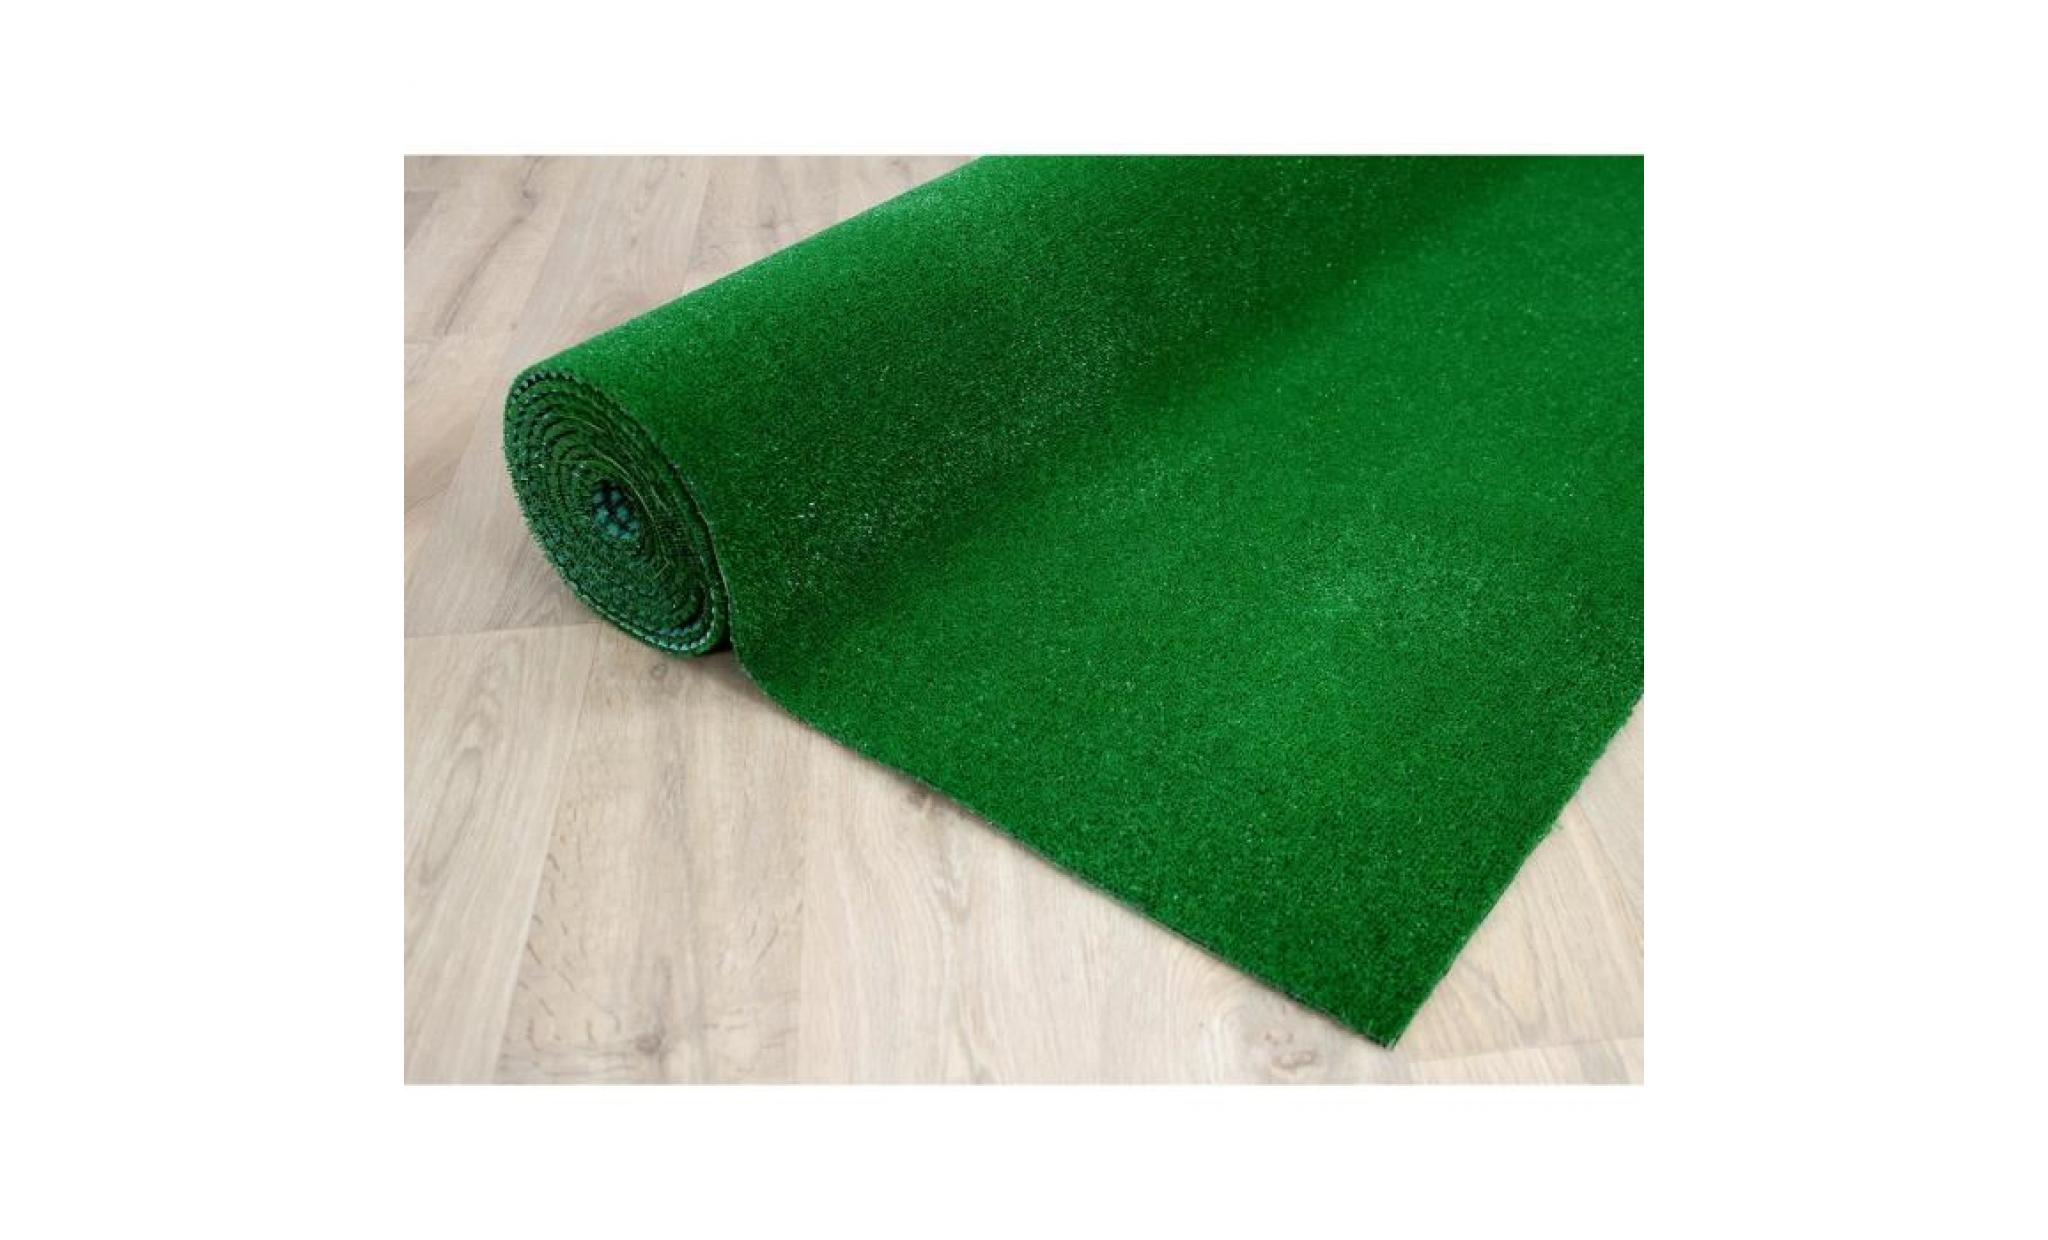 york   tapis type gazon artificiel avec nubs – pour jardin, terrasse, balcon   vert   [200x200 cm]